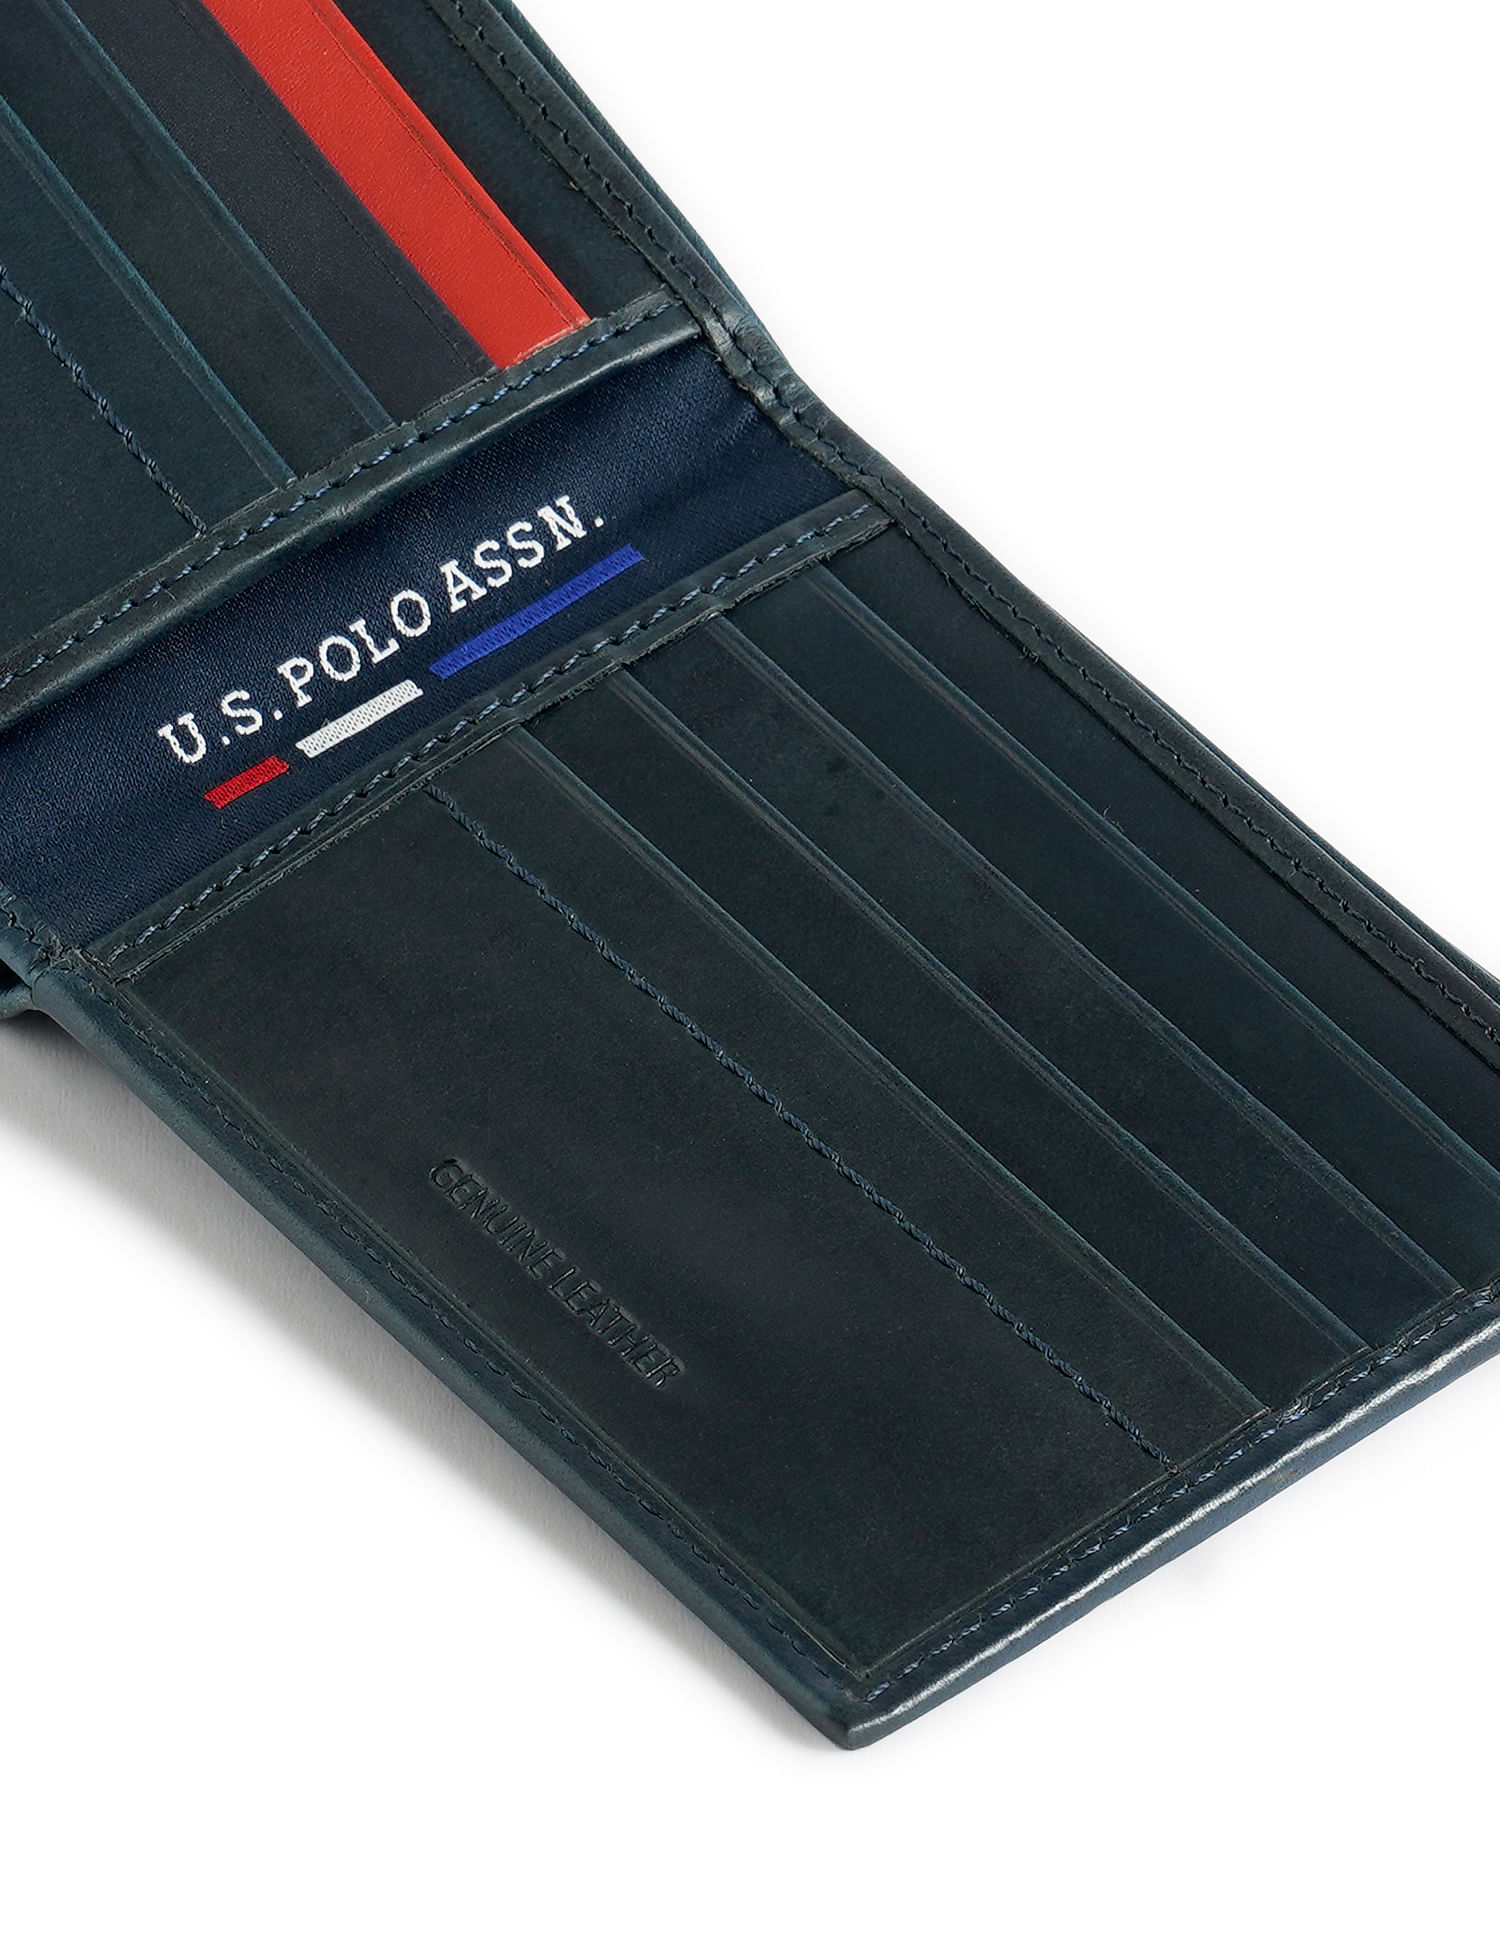 Buy Black Wallets for Men by U.S. Polo Assn. Online